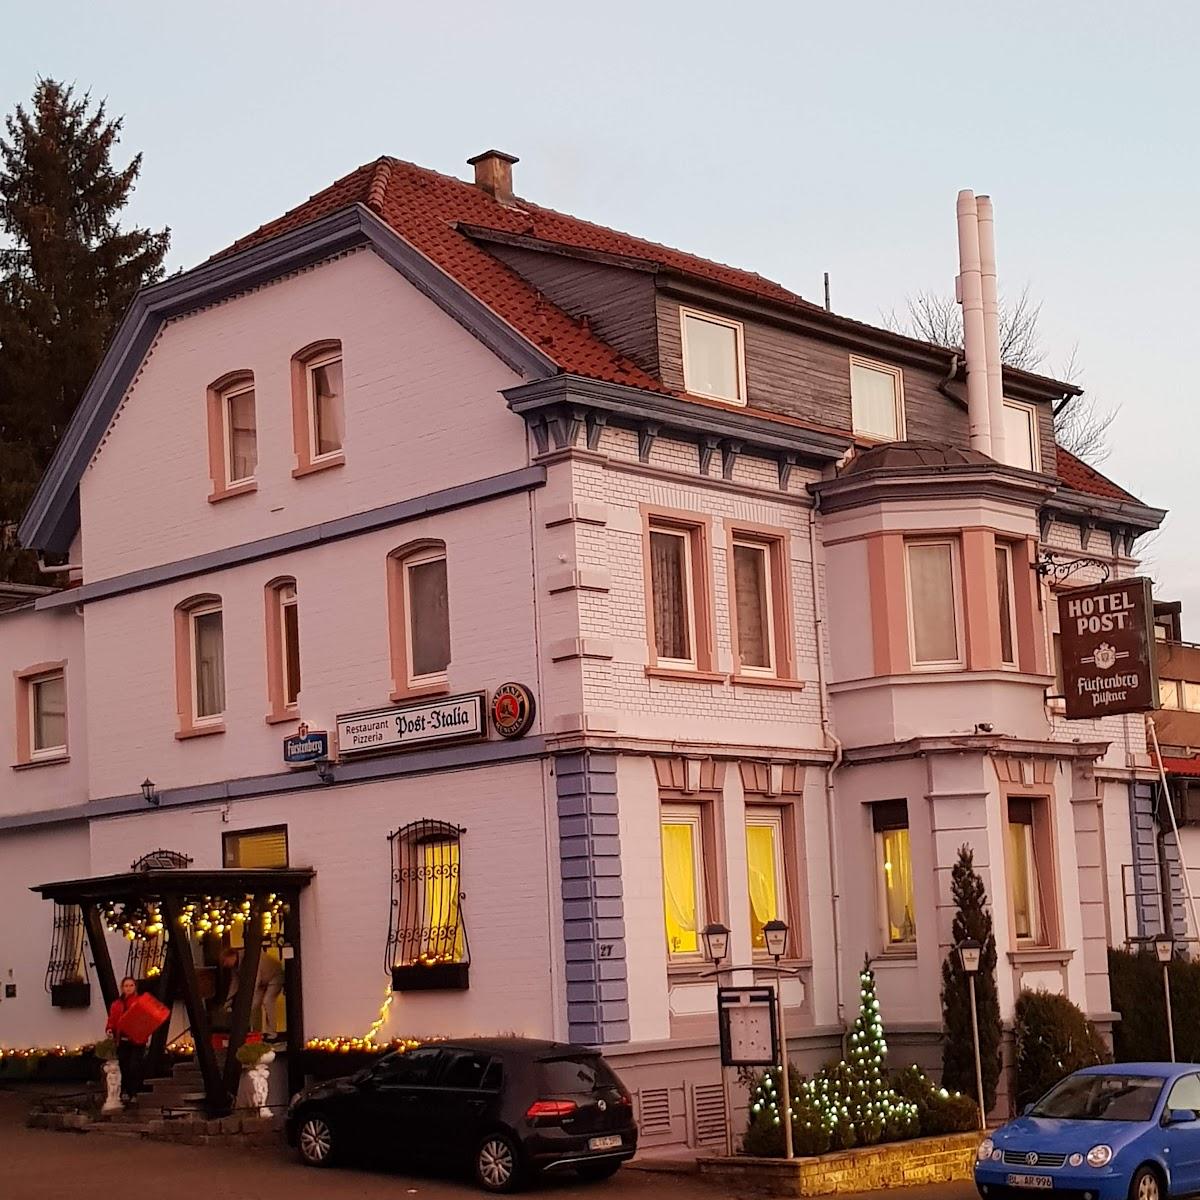 Restaurant "Hotel Post-Italia" in Albstadt